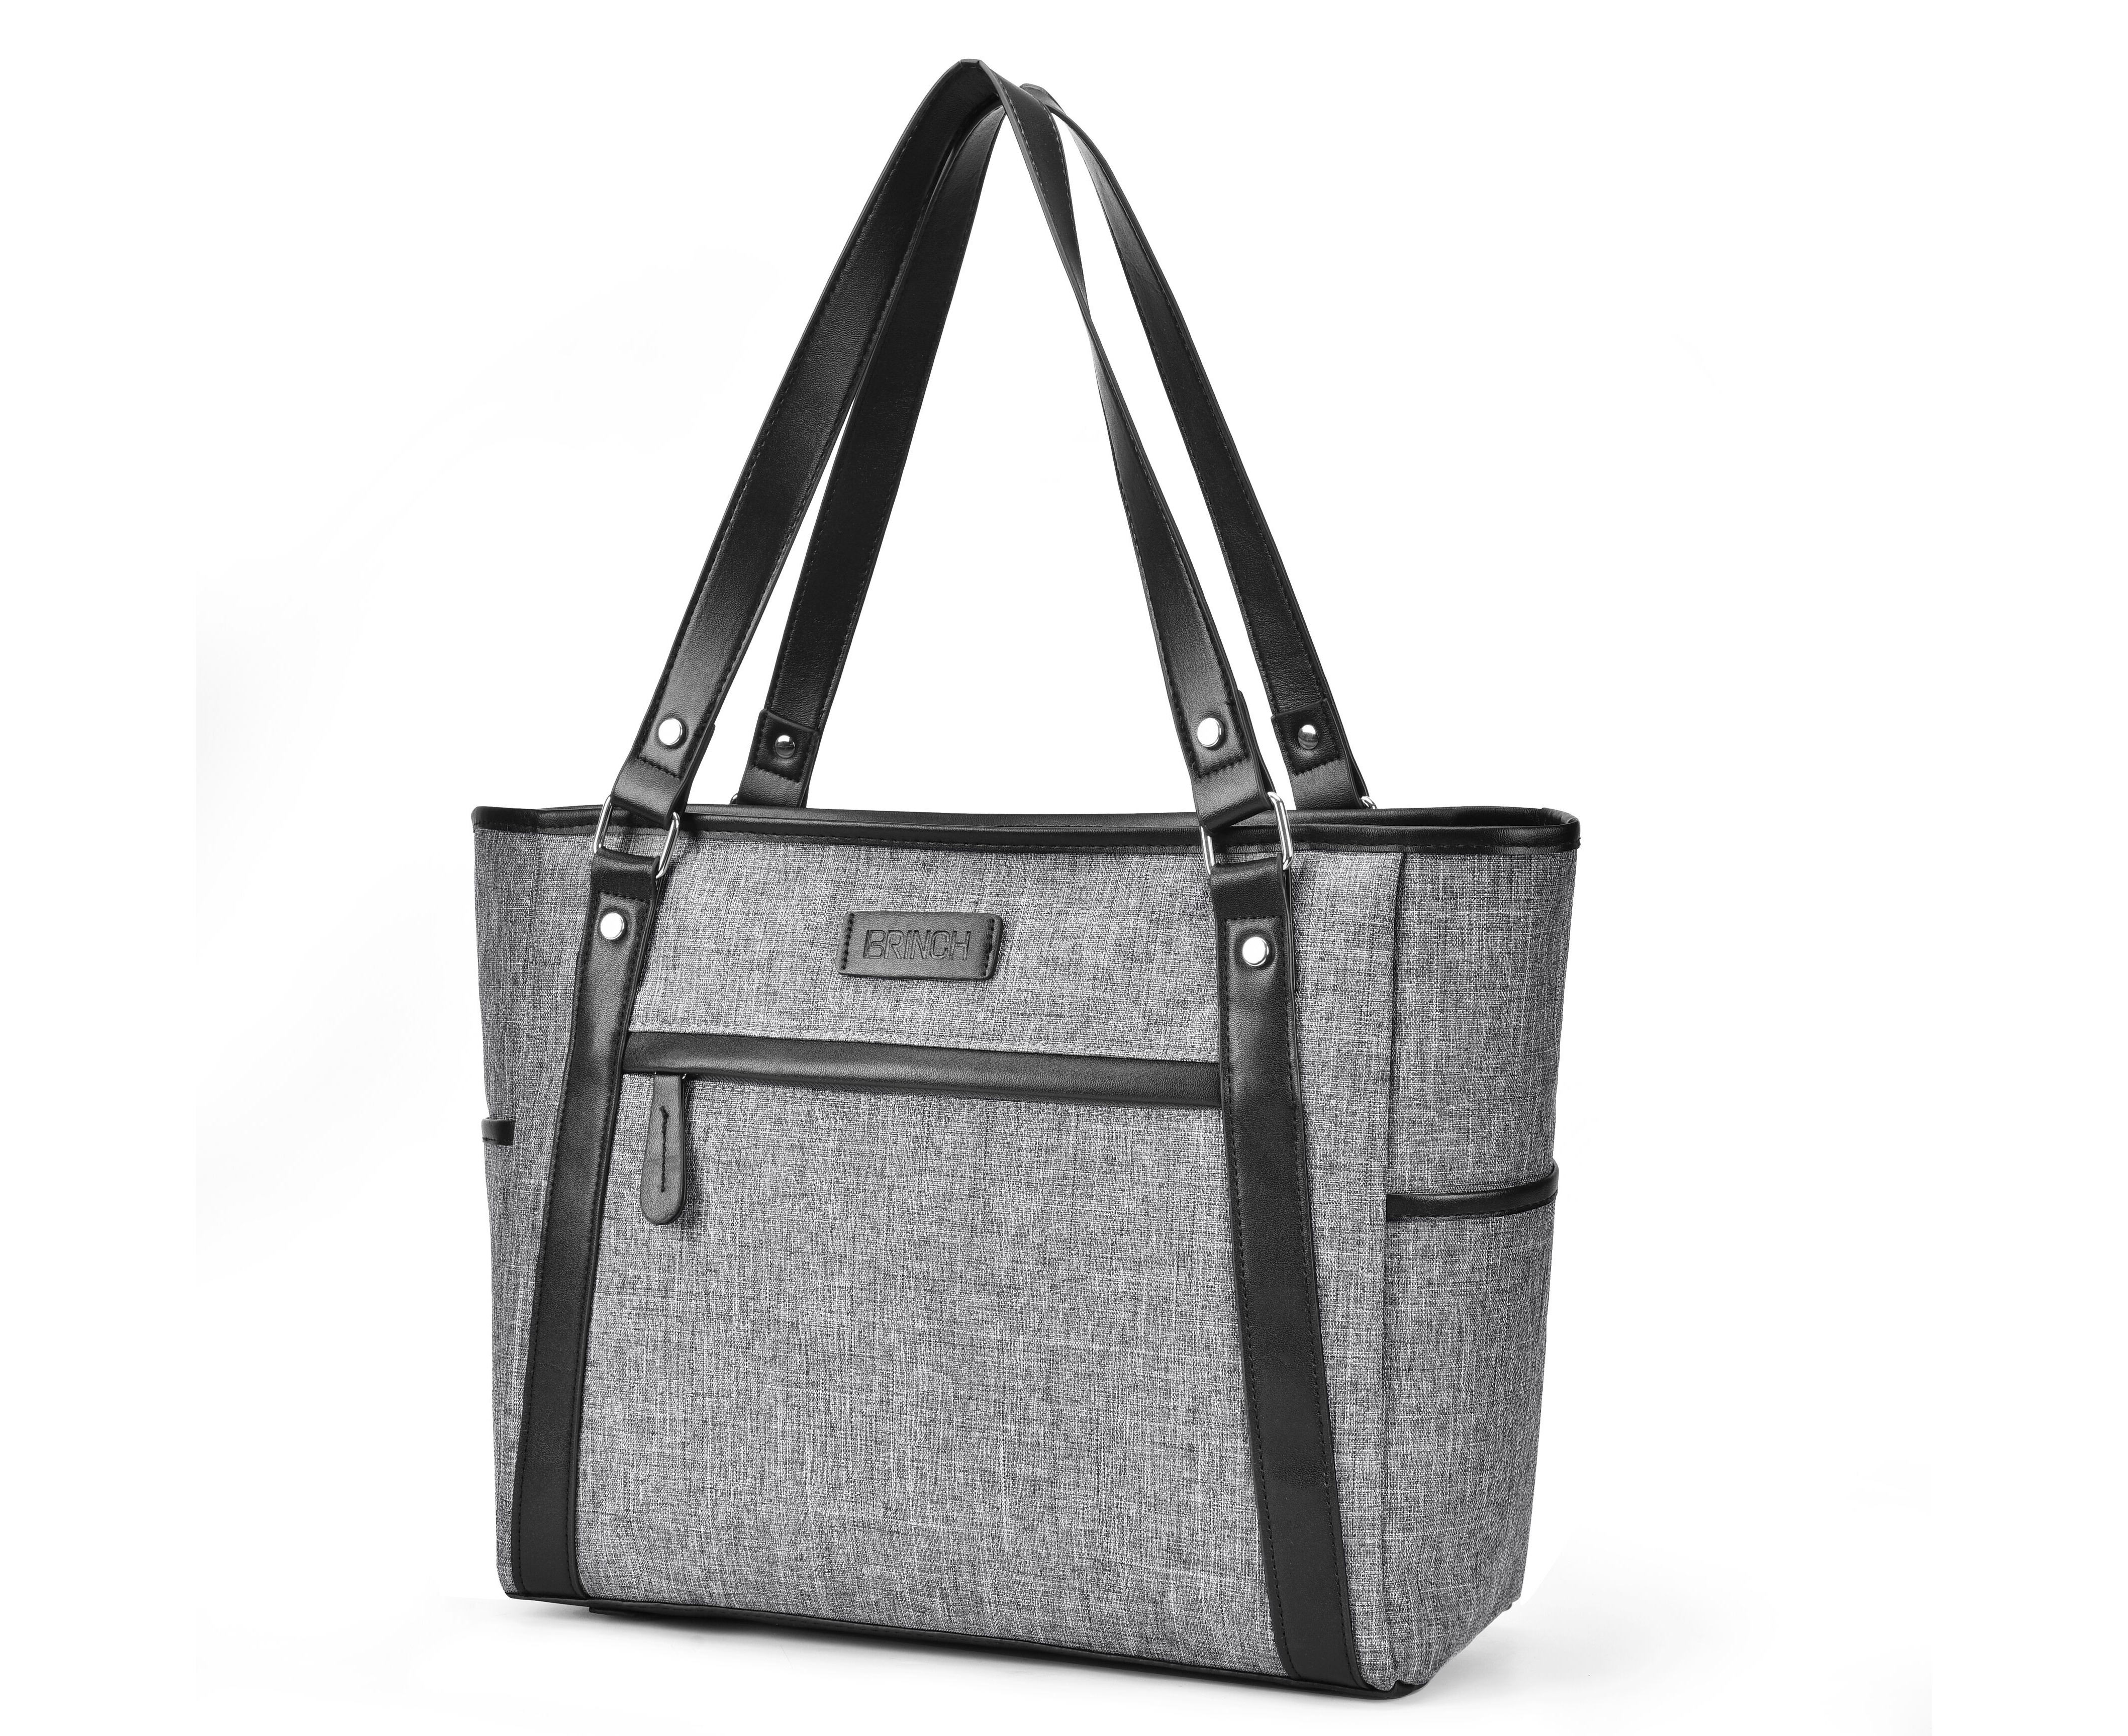 DTBG Laptop Tote Bag 15.6Inches Laptop Bag Nylon Shoulder Bag Women Briefcase Lightweight Handbag with Padded Compartment for Work Business Travel shopping Dark Grey 